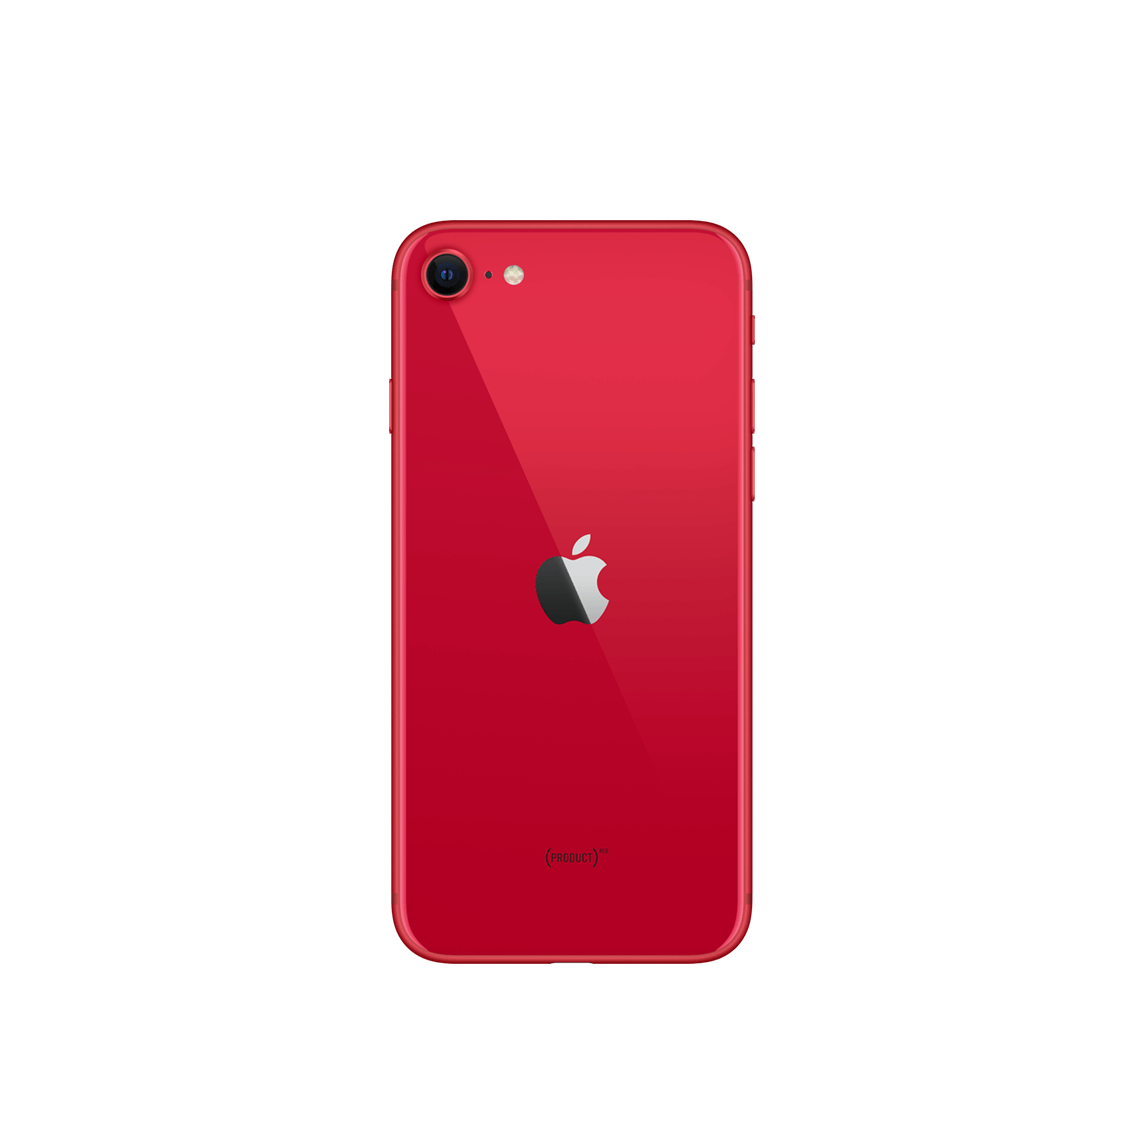 Apple iPhone SE 64GB (PRODUCT) Red (czerwony) 2020 - nowy ...